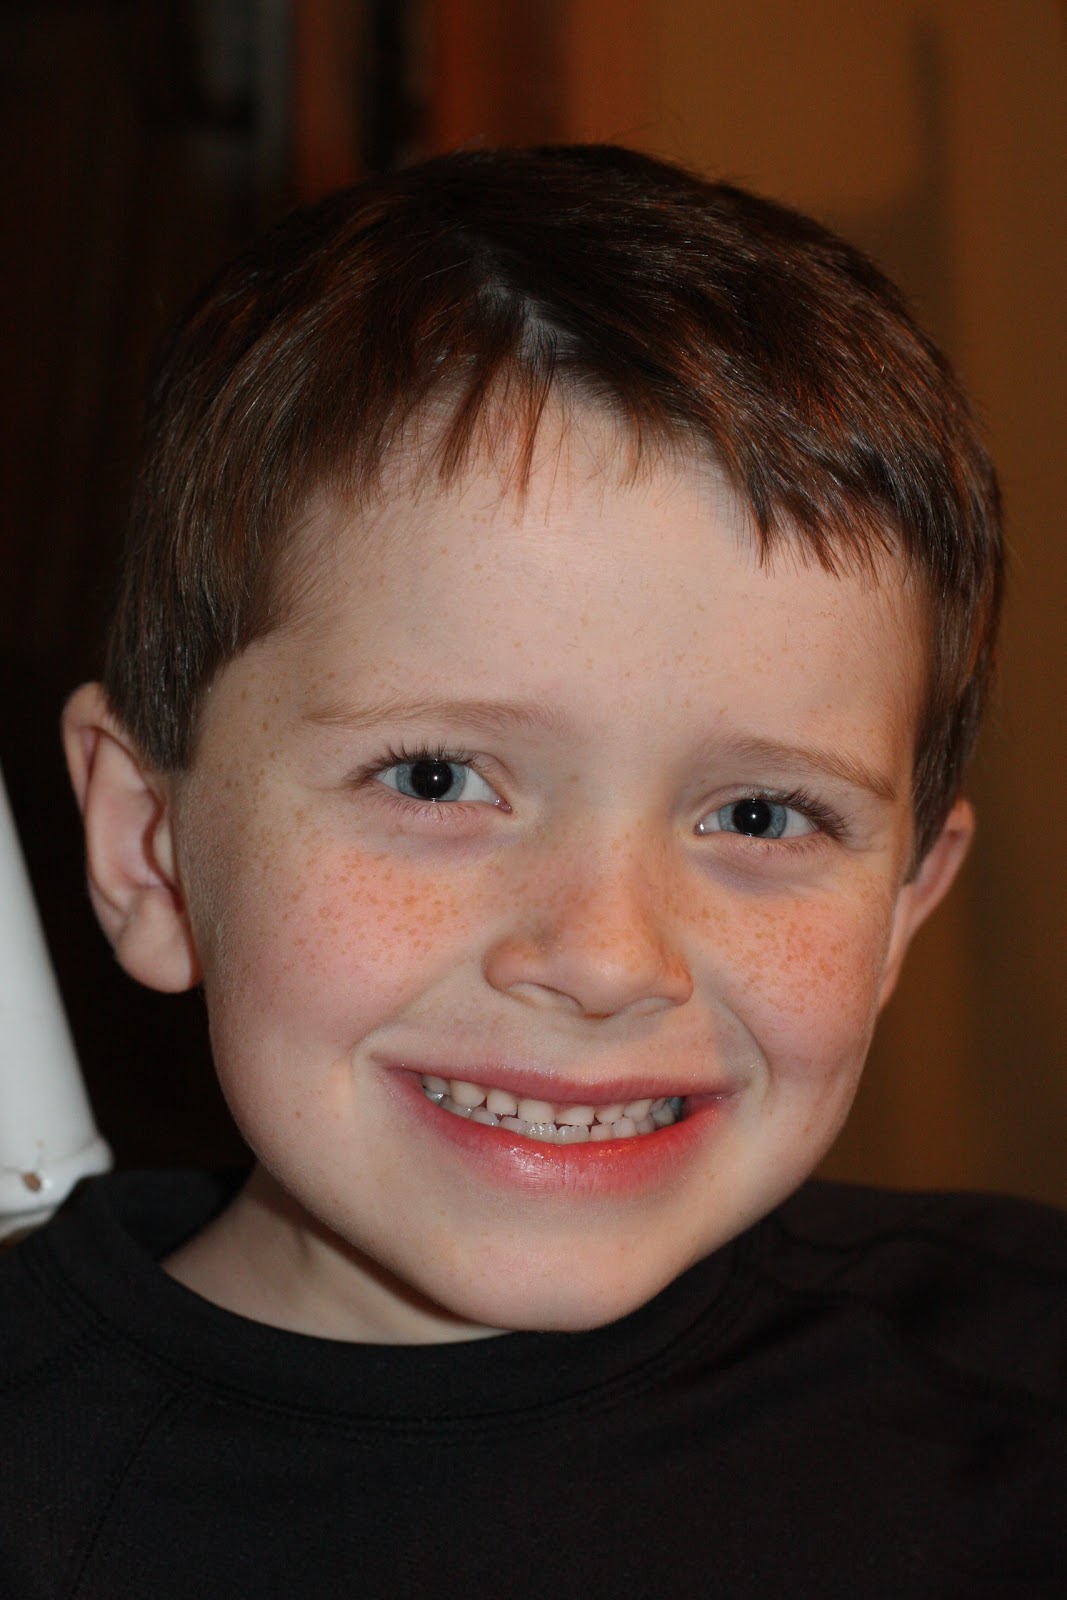 The McLaughlin Family Blog: A Haircut For My Handsome Boy